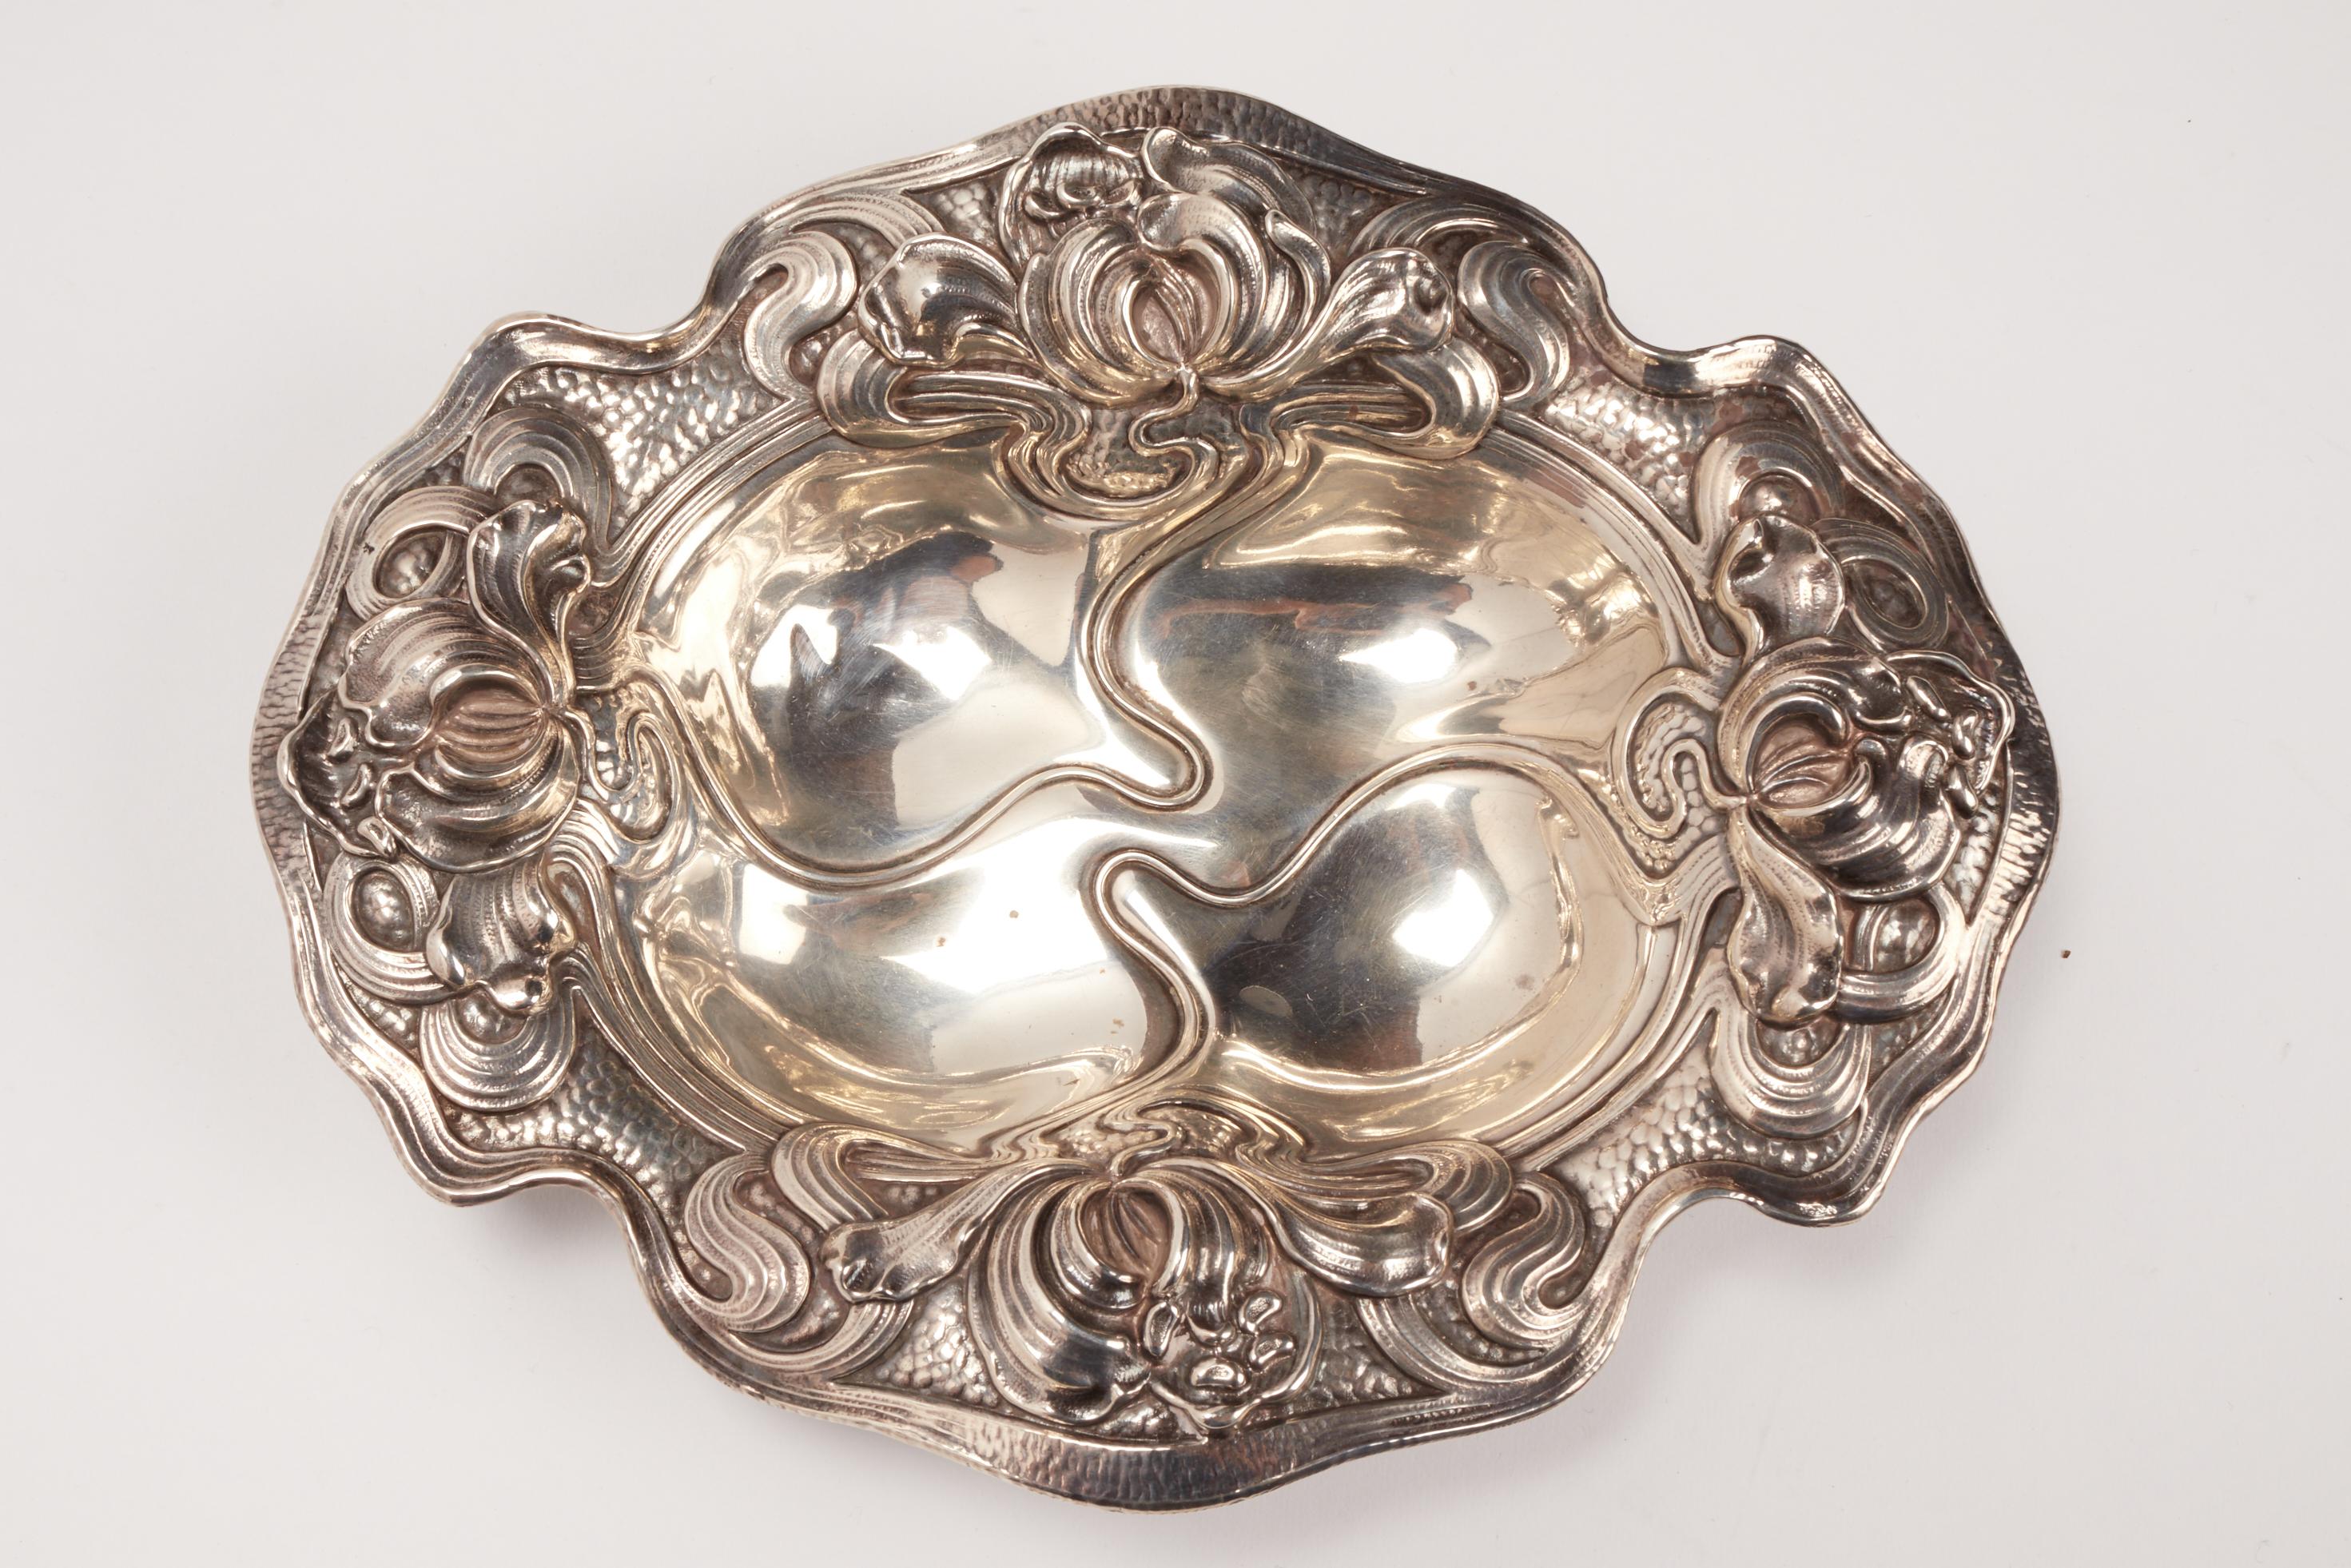 Art Nouveau sterling silver bowl, oval shape. The repoussé decoration is in purest Art Nouveau style, depicting chrysanthemums. Gorham Manufacturing Co. United States circa 1890. 